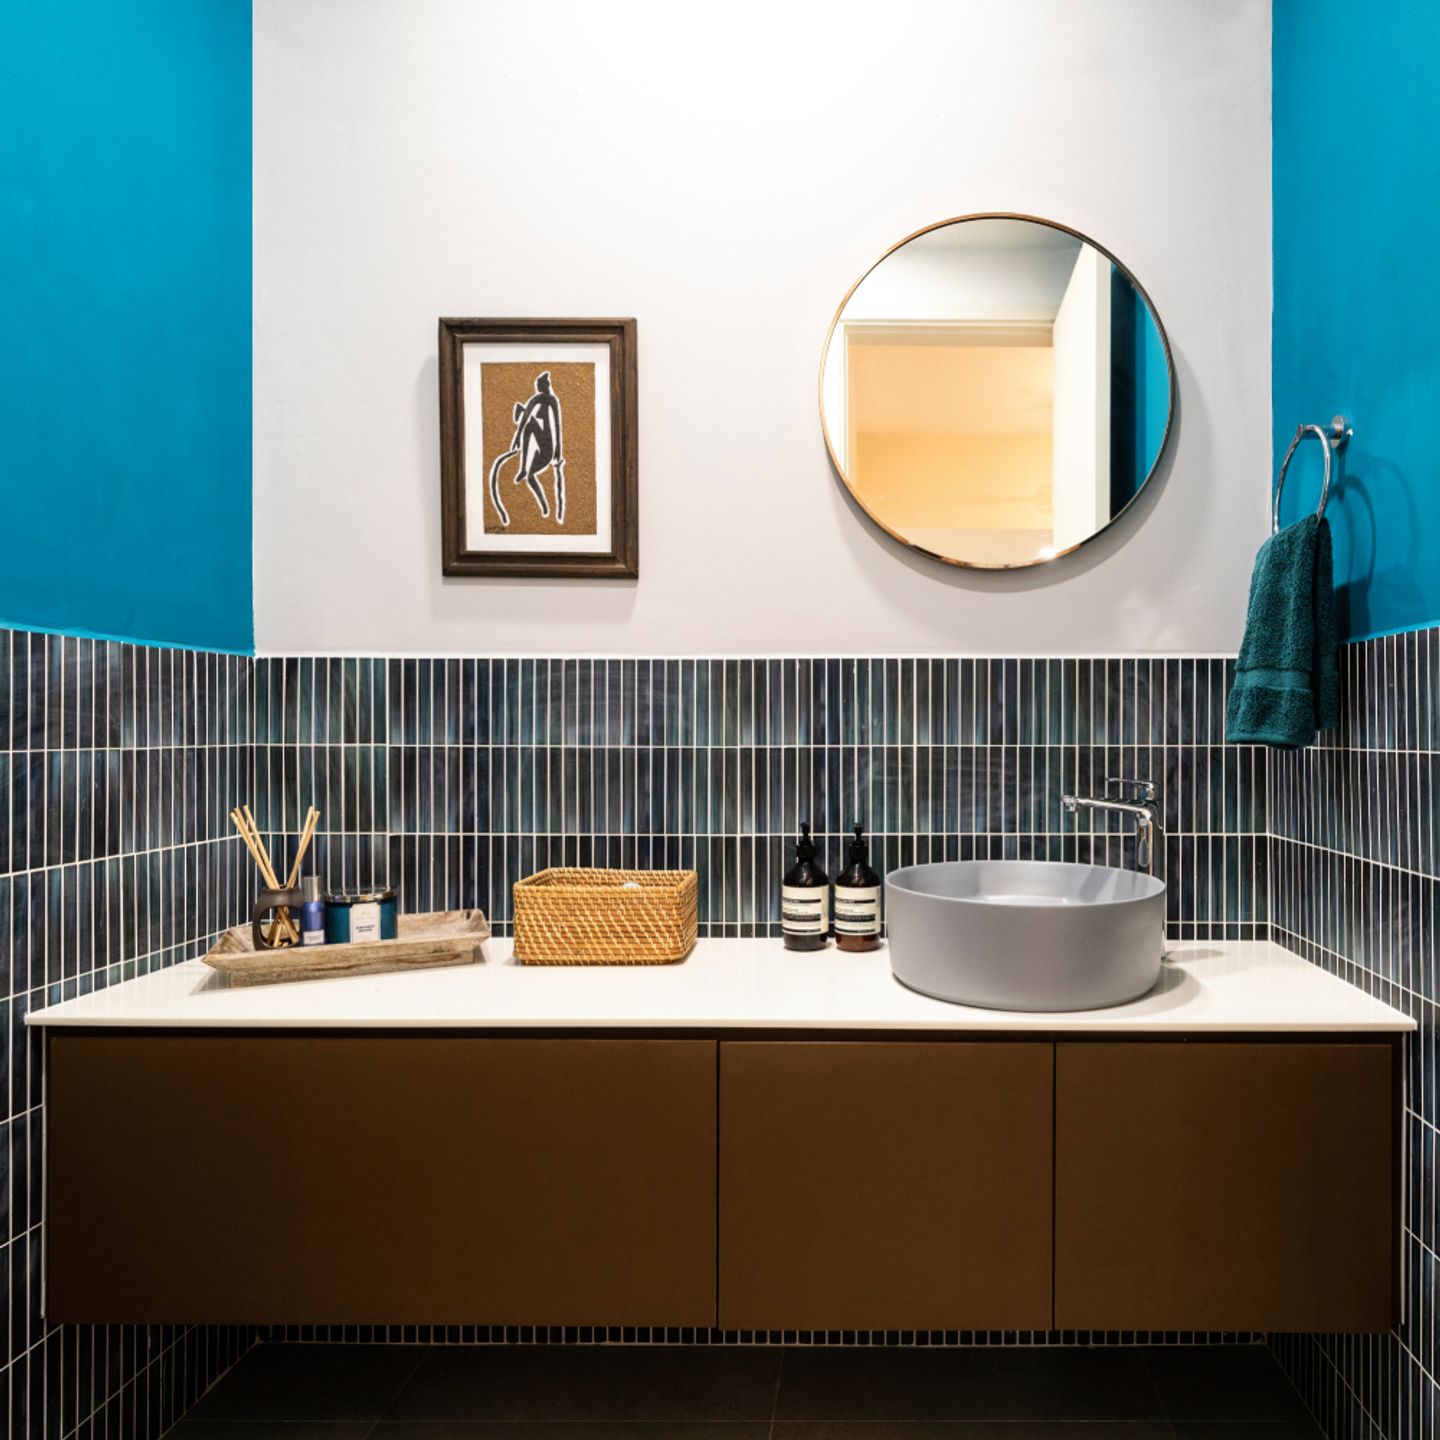 Blue Bathroom Design With Wall Art - Livspace